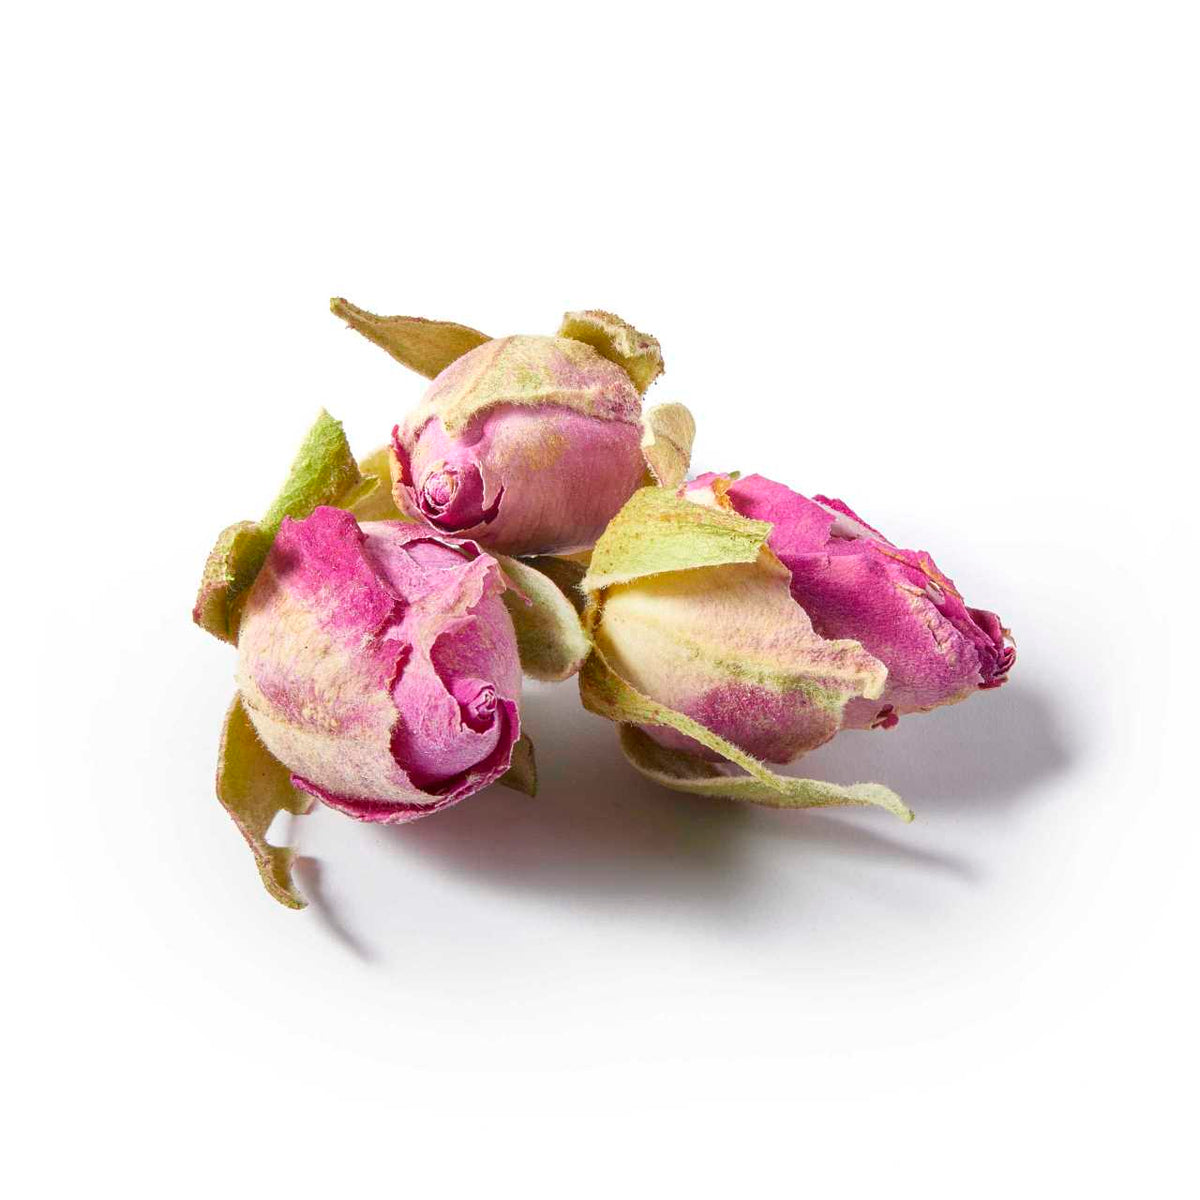 PINK ROSE BUDS (ROSEBUDS), FLOWERS